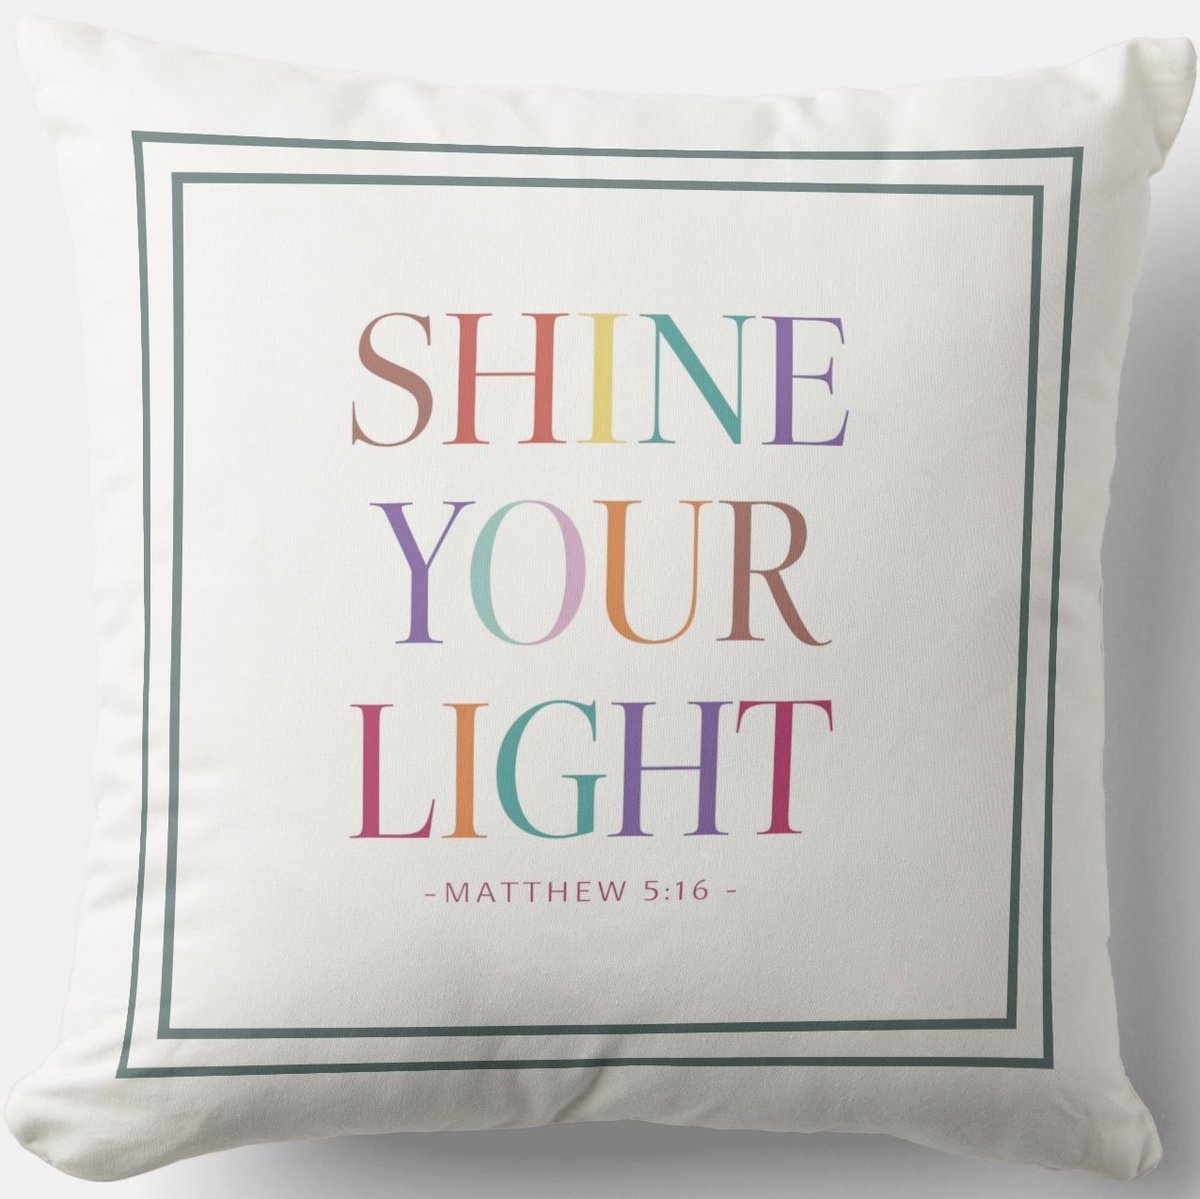 Shine Your Light #Cushion zazzle.com/shine_your_lig… Biblical Message #Pillow #Blessing #JesusChrist #JesusSaves #Jesus #christian #spiritual #Homedecoration #uniquegift #giftideas #MothersDayGifts #giftformom #giftidea #HolySpirit #pillows #giftshop #giftsforher #giftsformom #shine